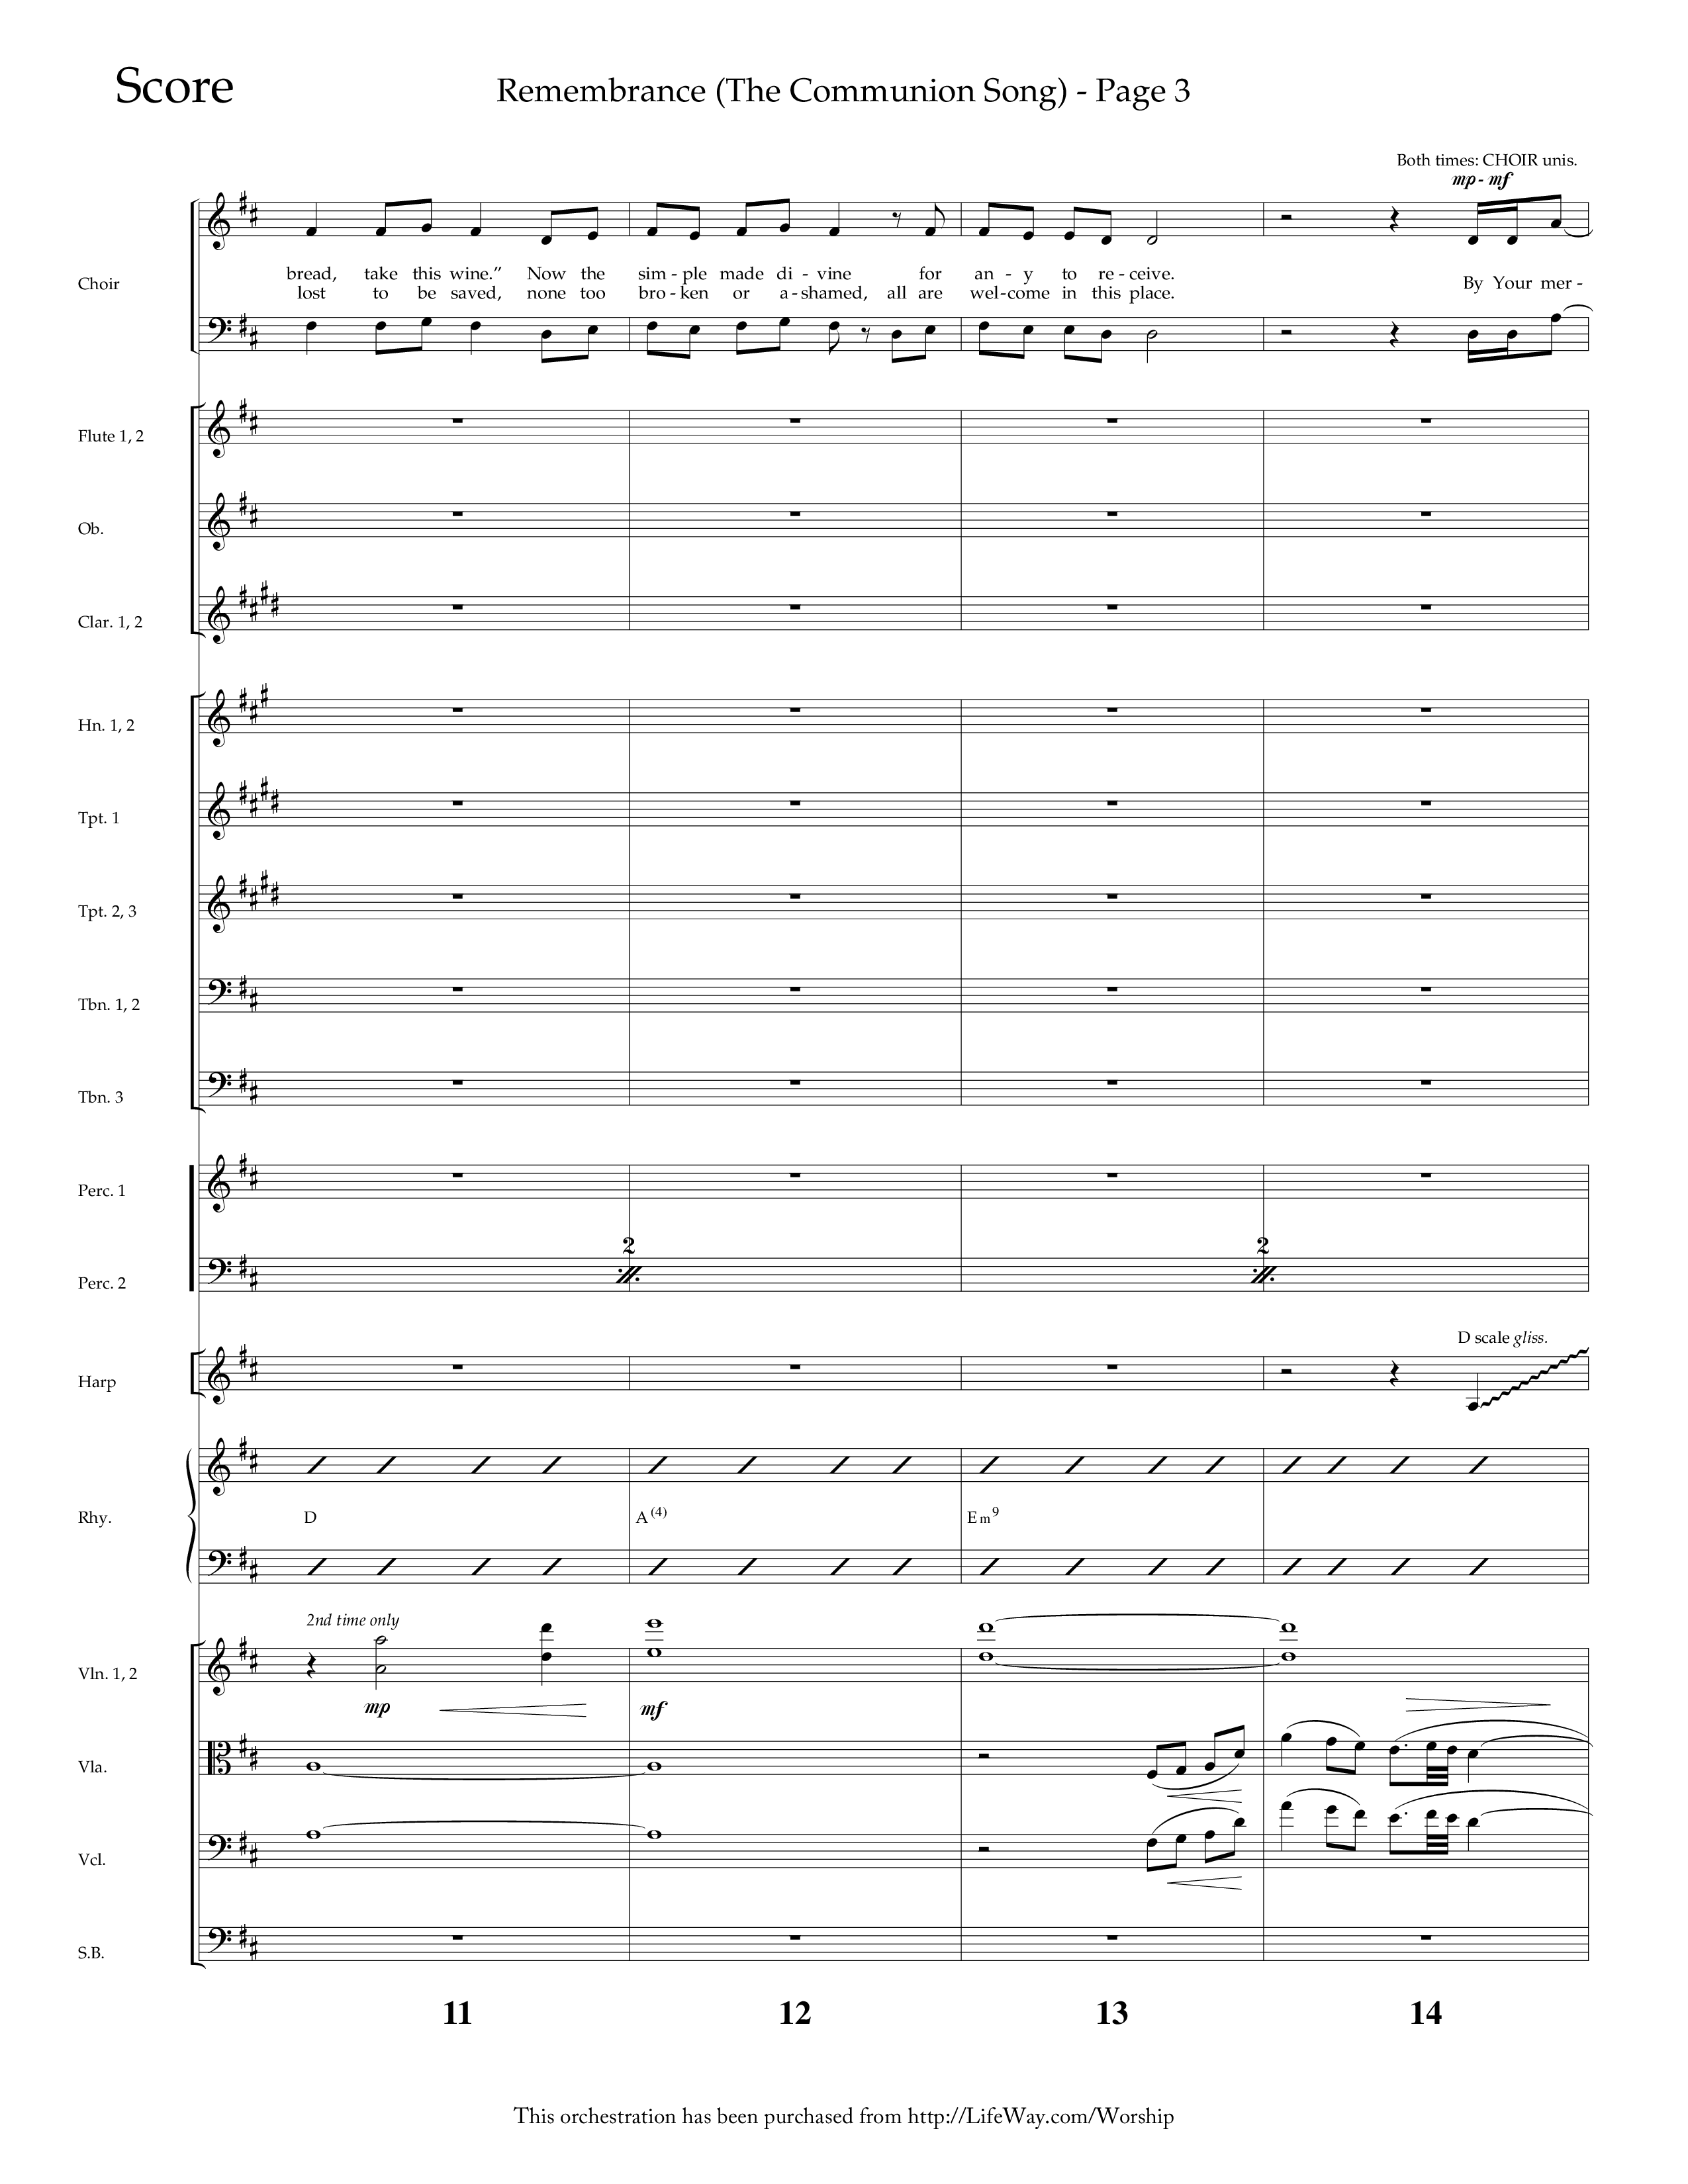 Remembrance (Choral Anthem SATB) Conductor's Score (Lifeway Choral / Arr. Charlie Sinclair / Arr. Carol Tornquist / Orch. Danny Zaloudik)